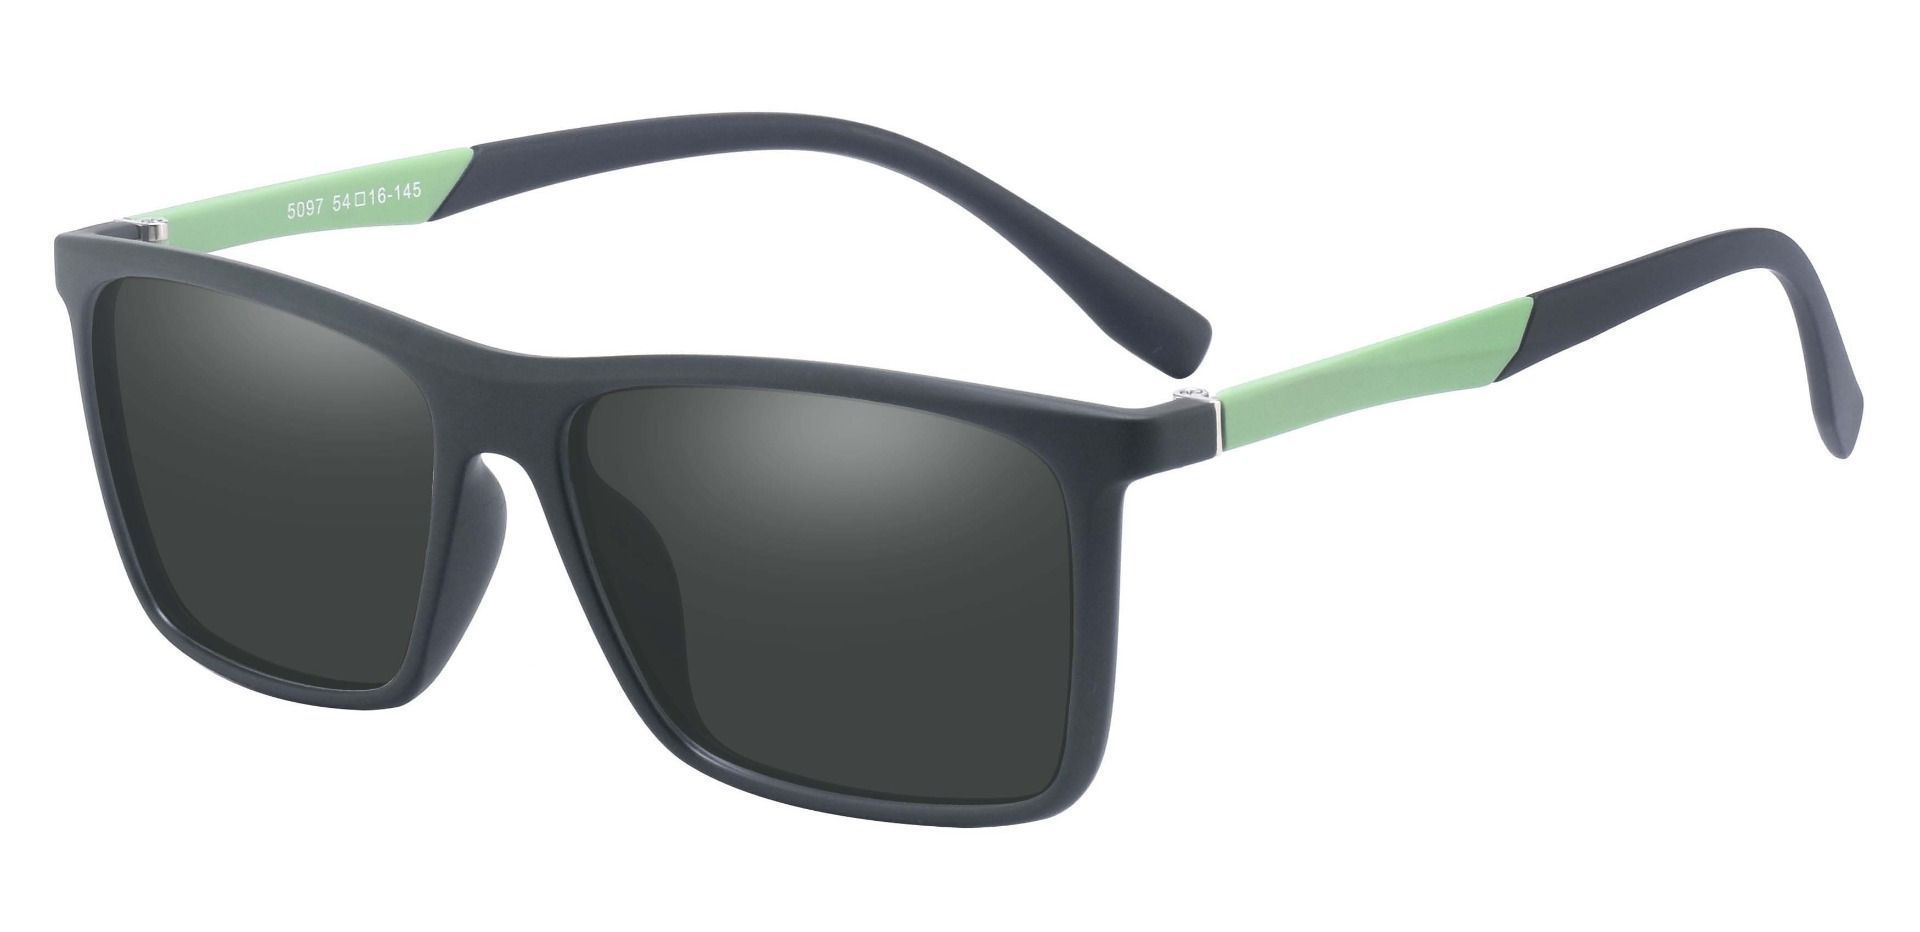 Cleveland Rectangle Prescription Sunglasses - Green Frame With Gray Lenses